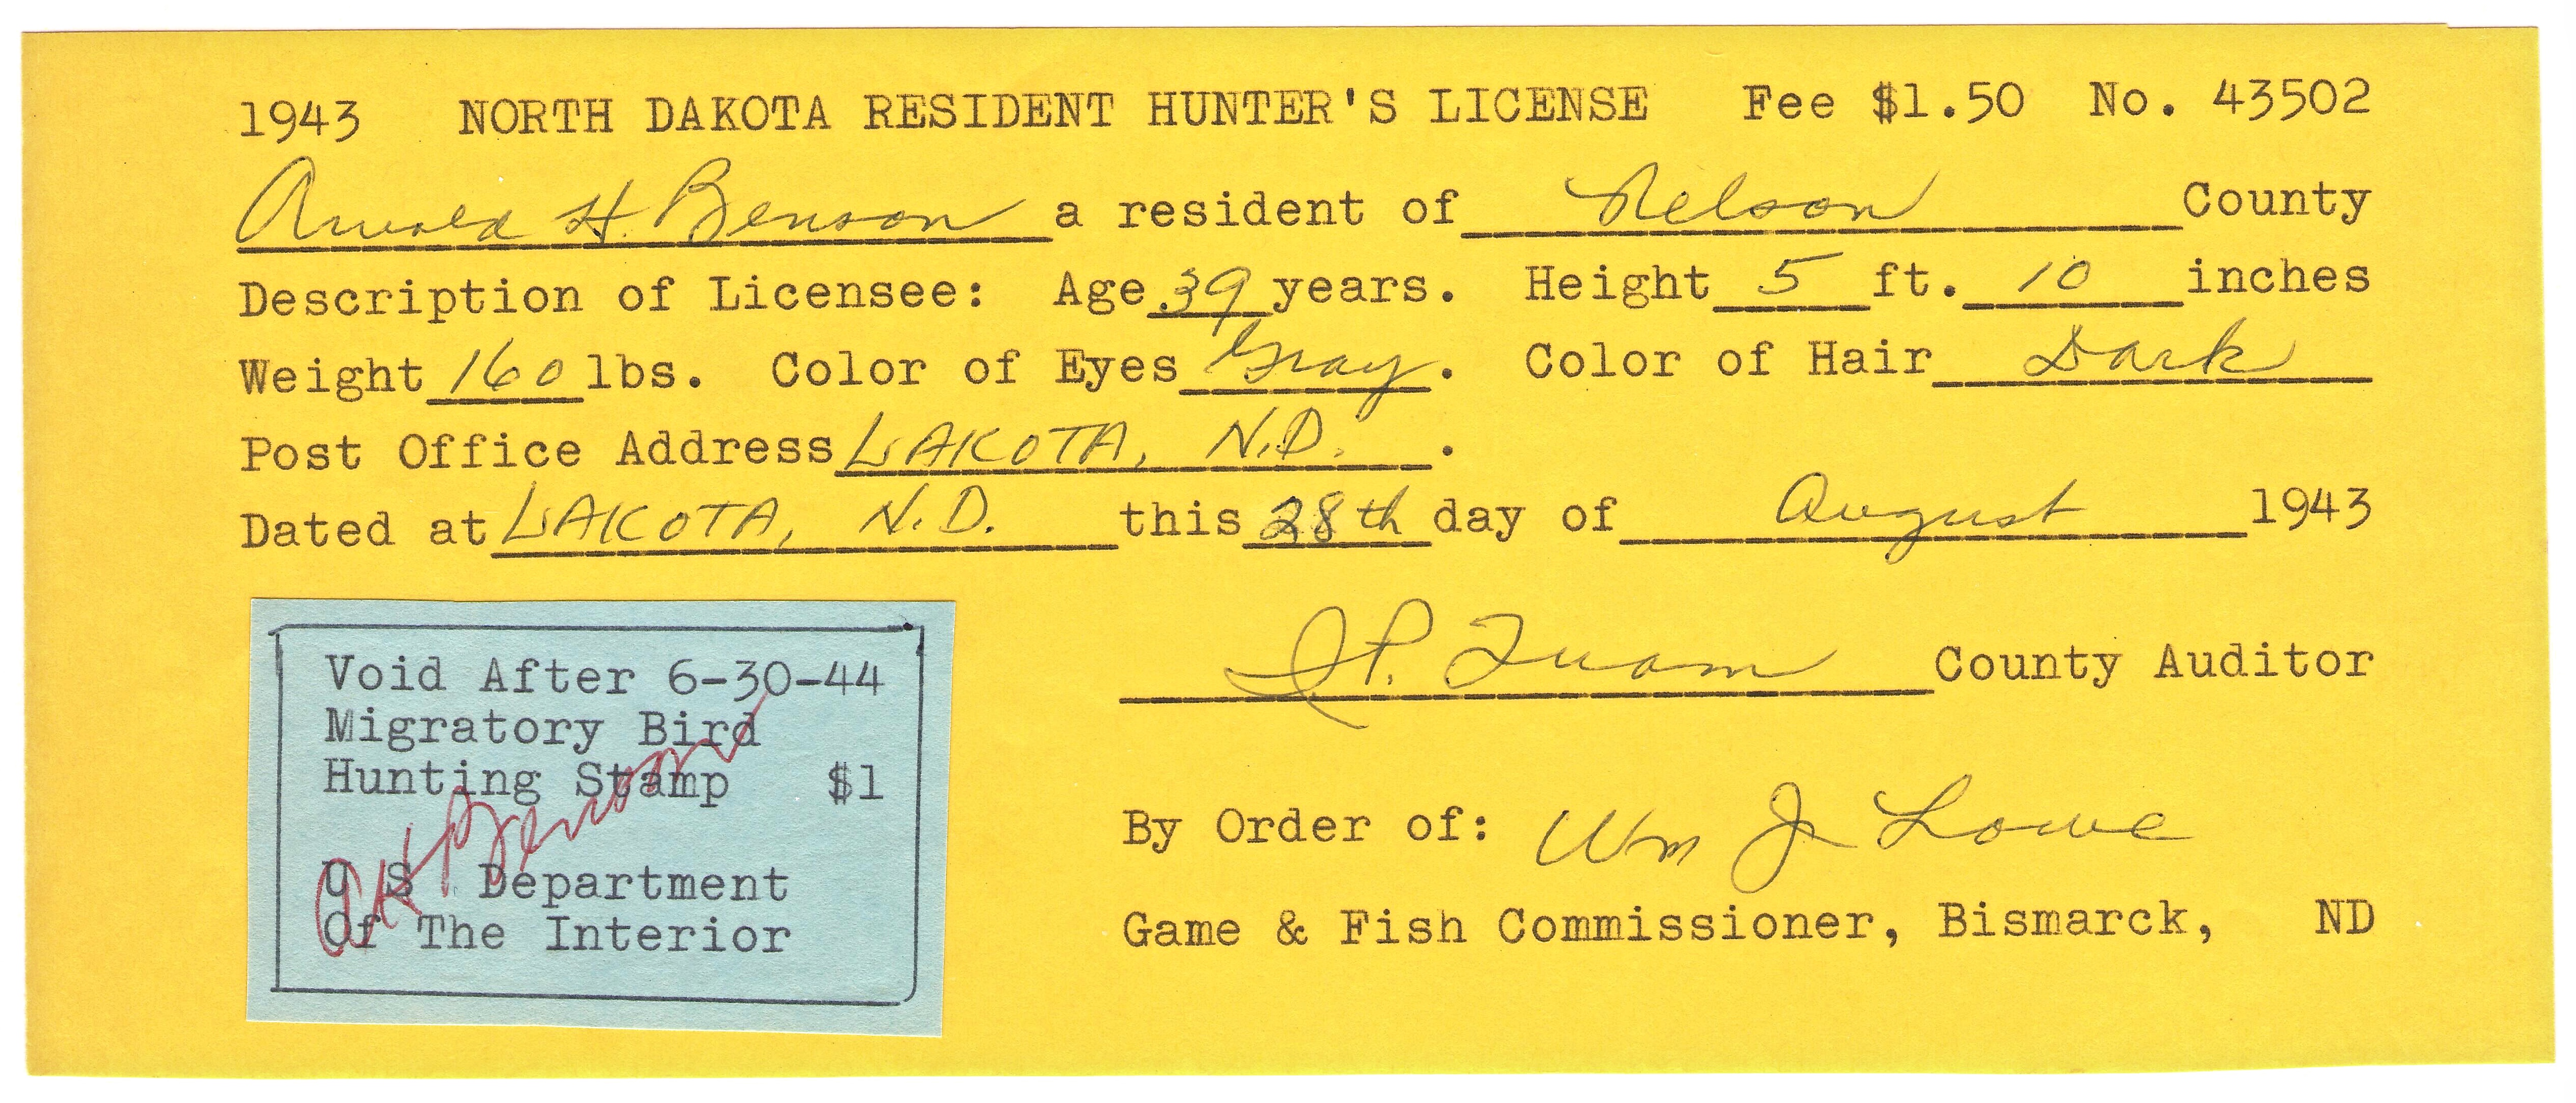 RW10 Provisional Used on Provisional North Dakota License